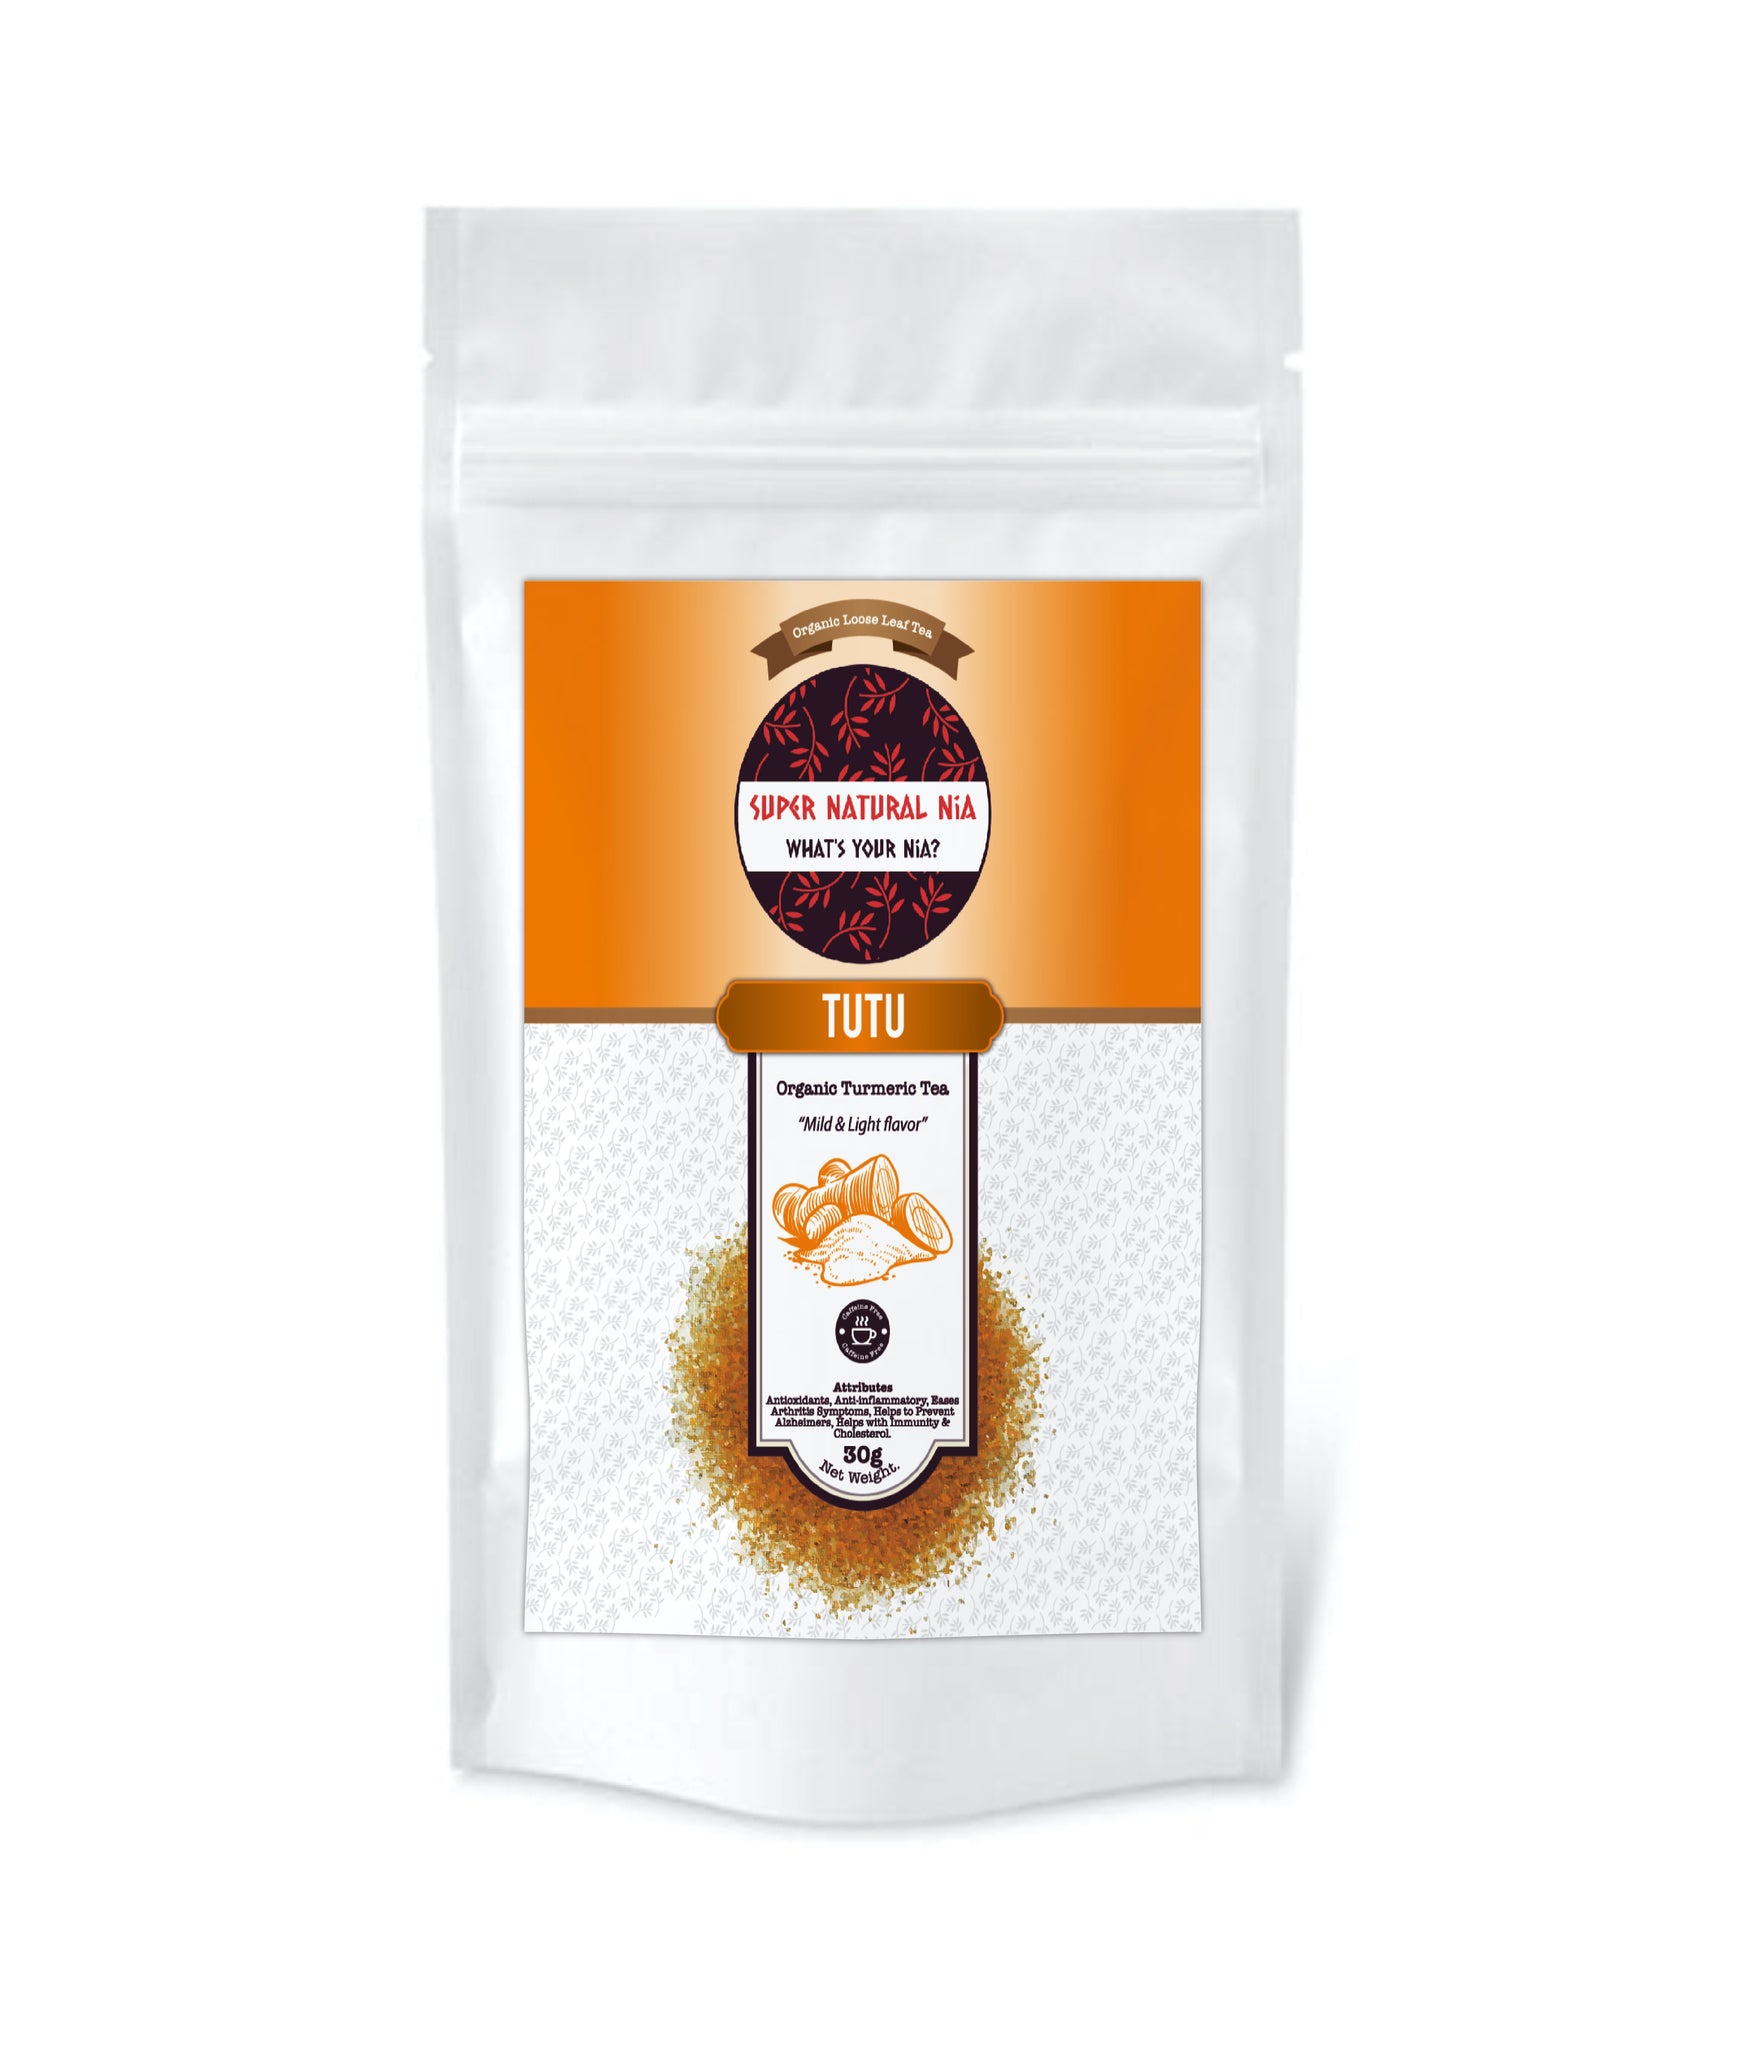 TUTU "Organic Turmeric Herbal Powdered Tea"